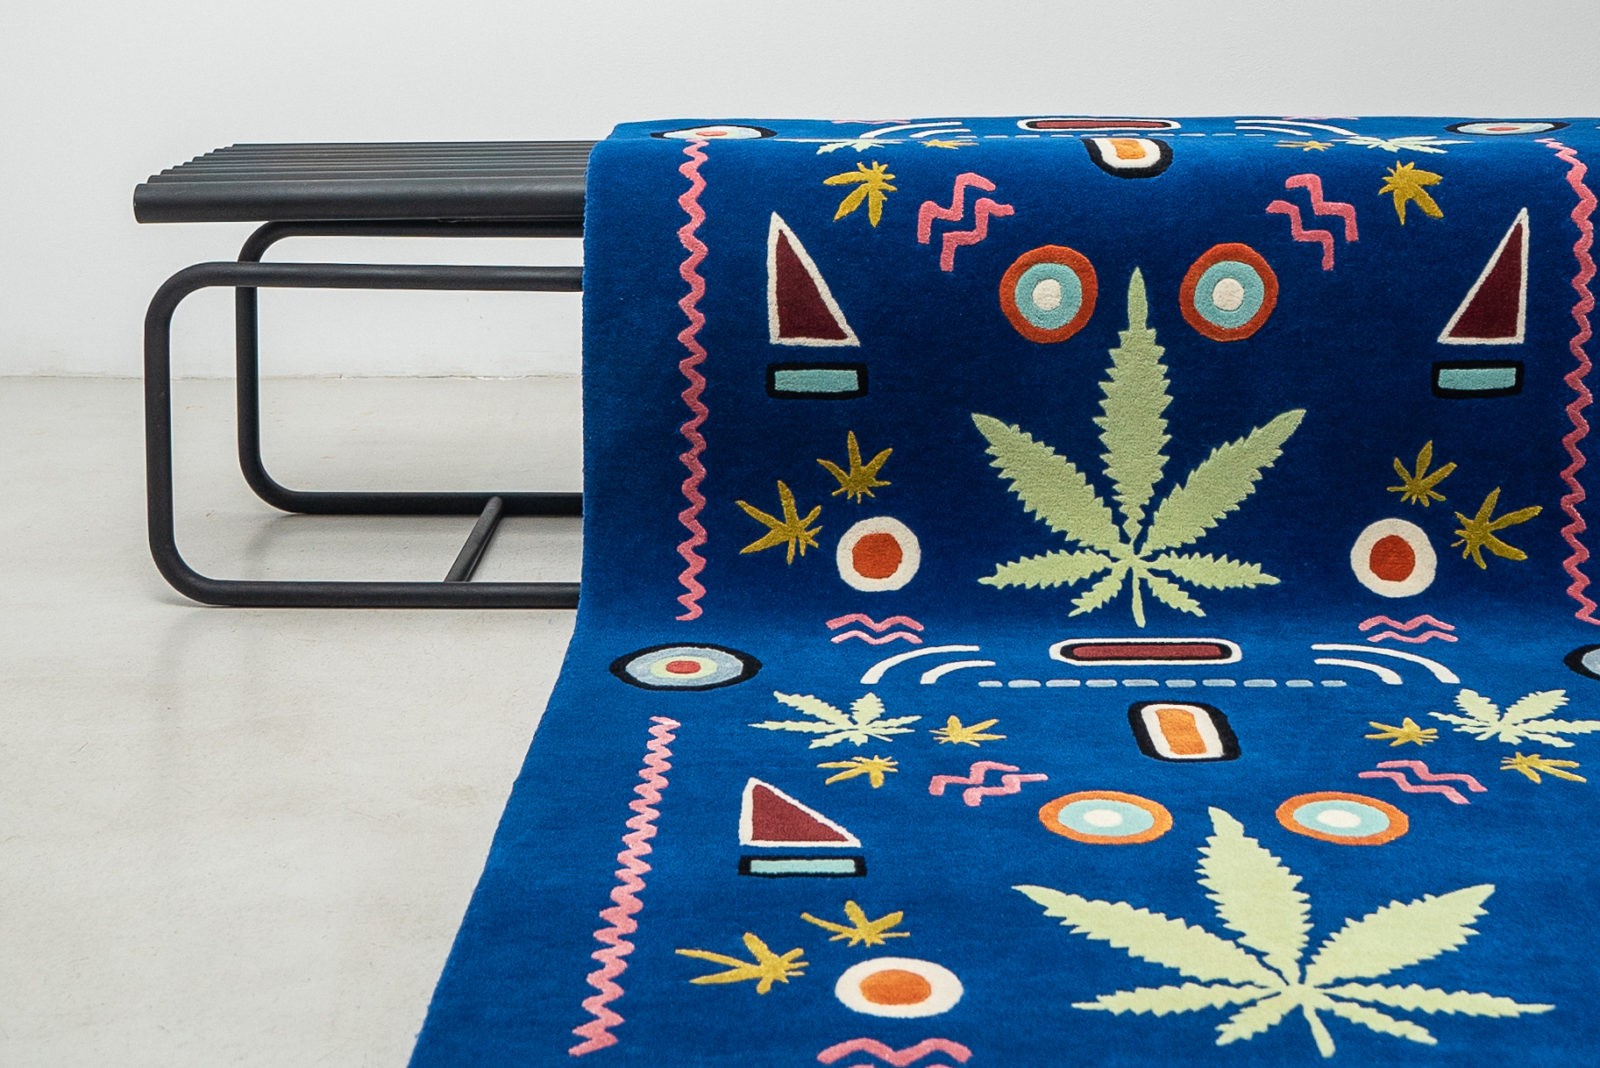 Lush rug design.